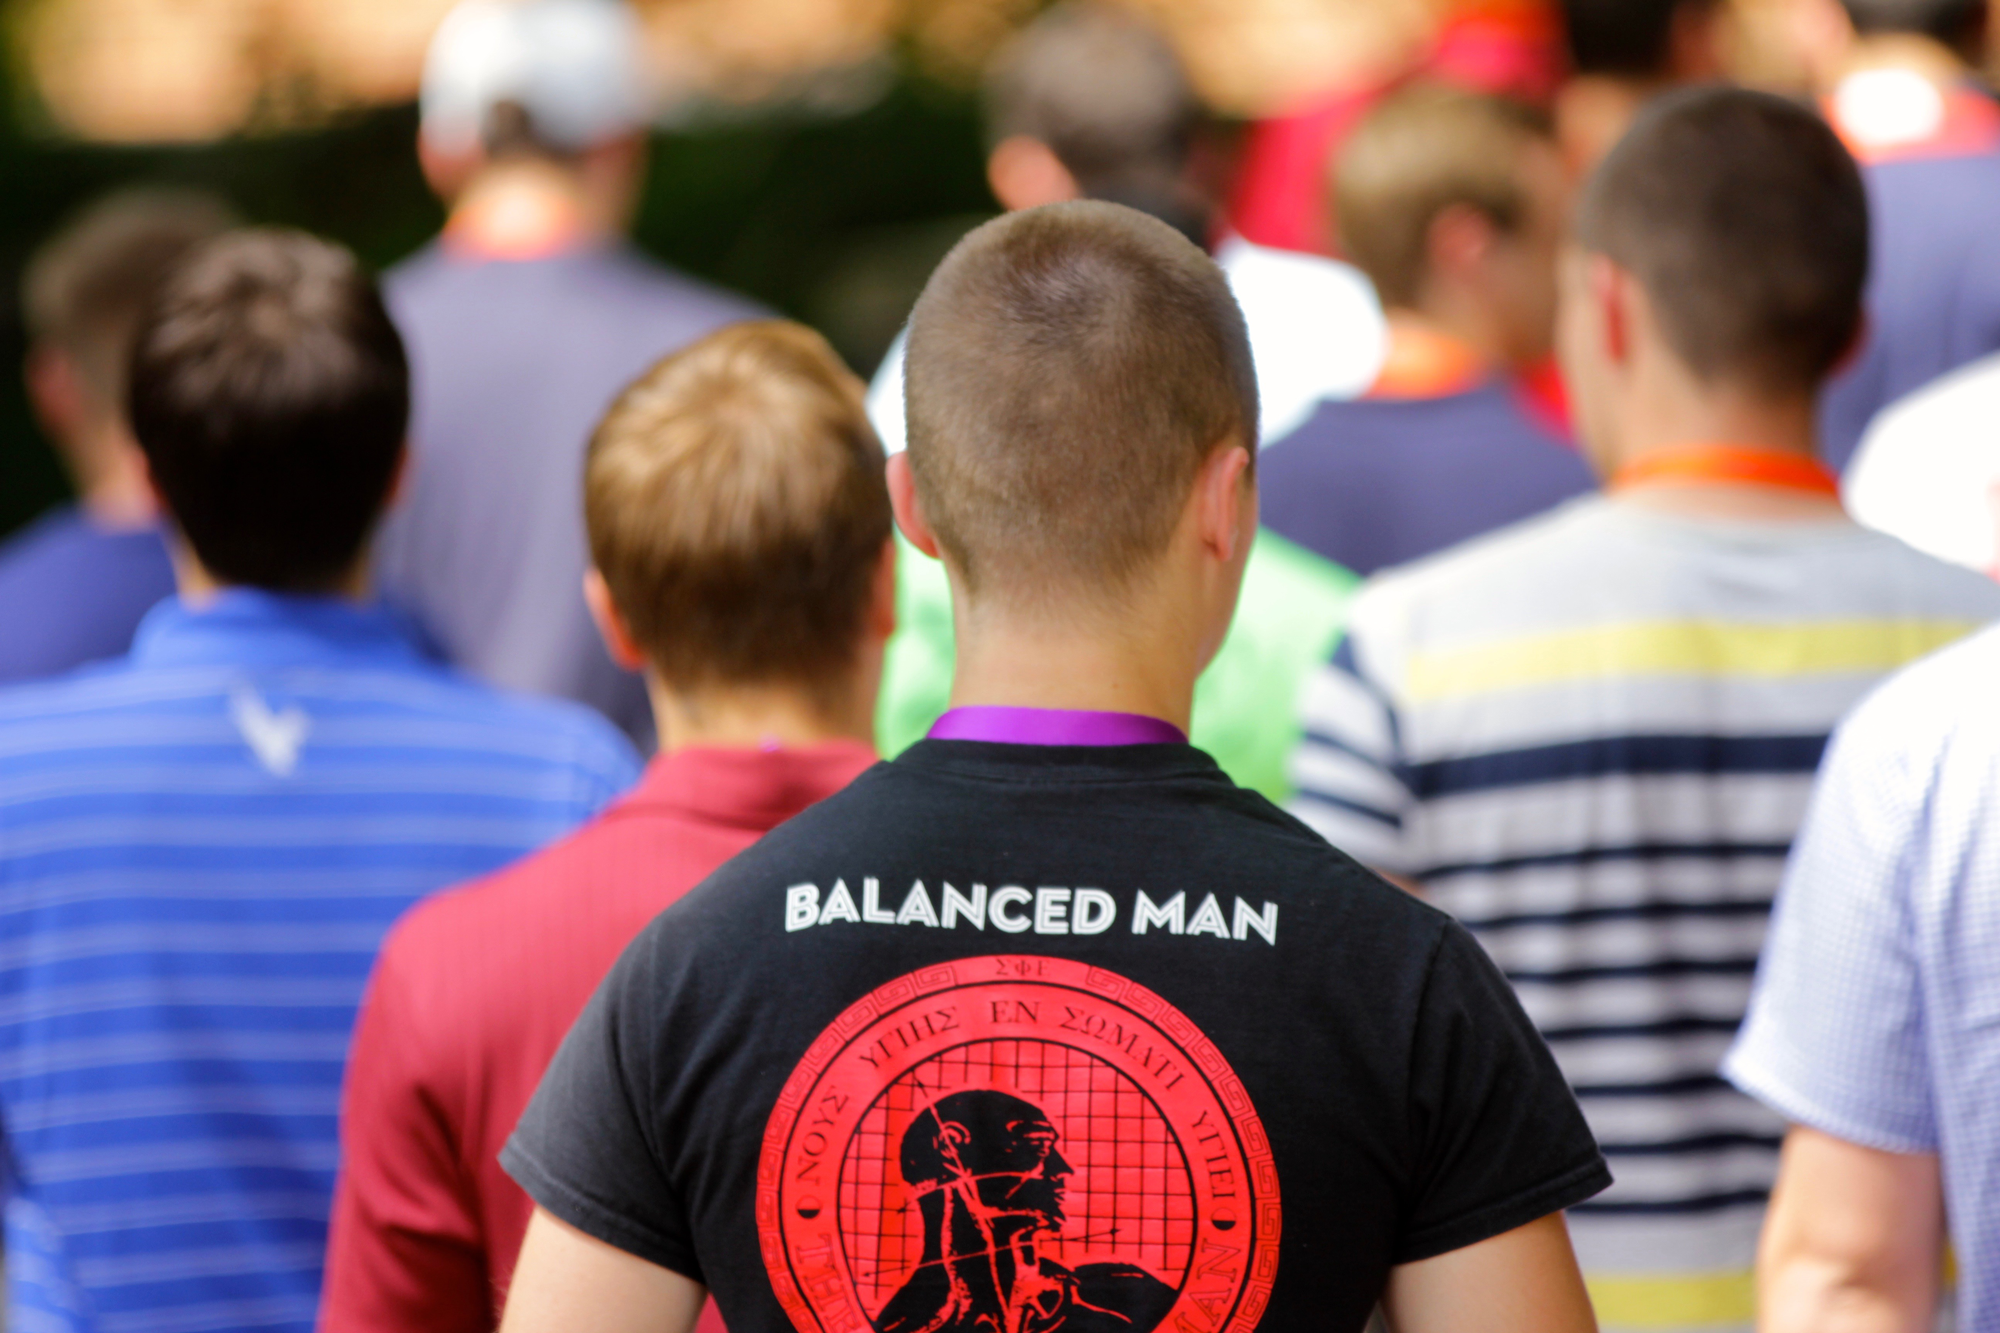 The Balanced Man Program